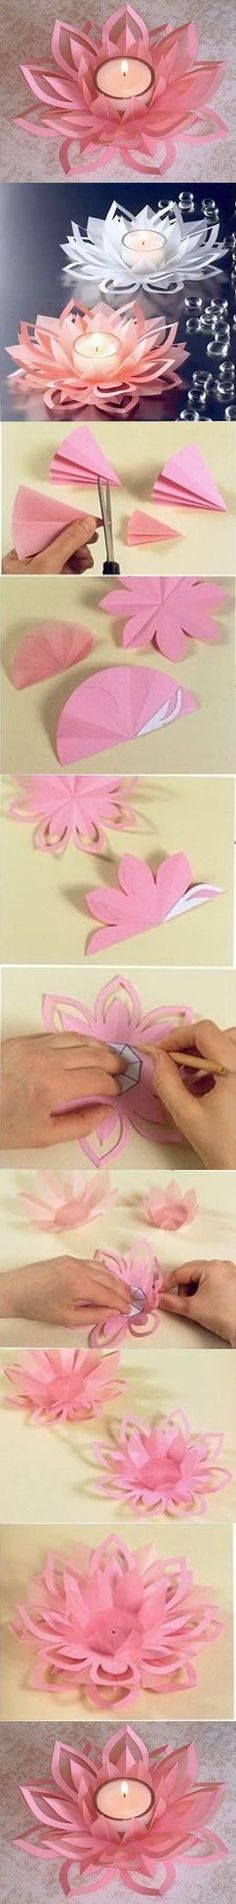 DIY Paper Lotus tea candle decor. The perfect way to dress up a plain tea candle!